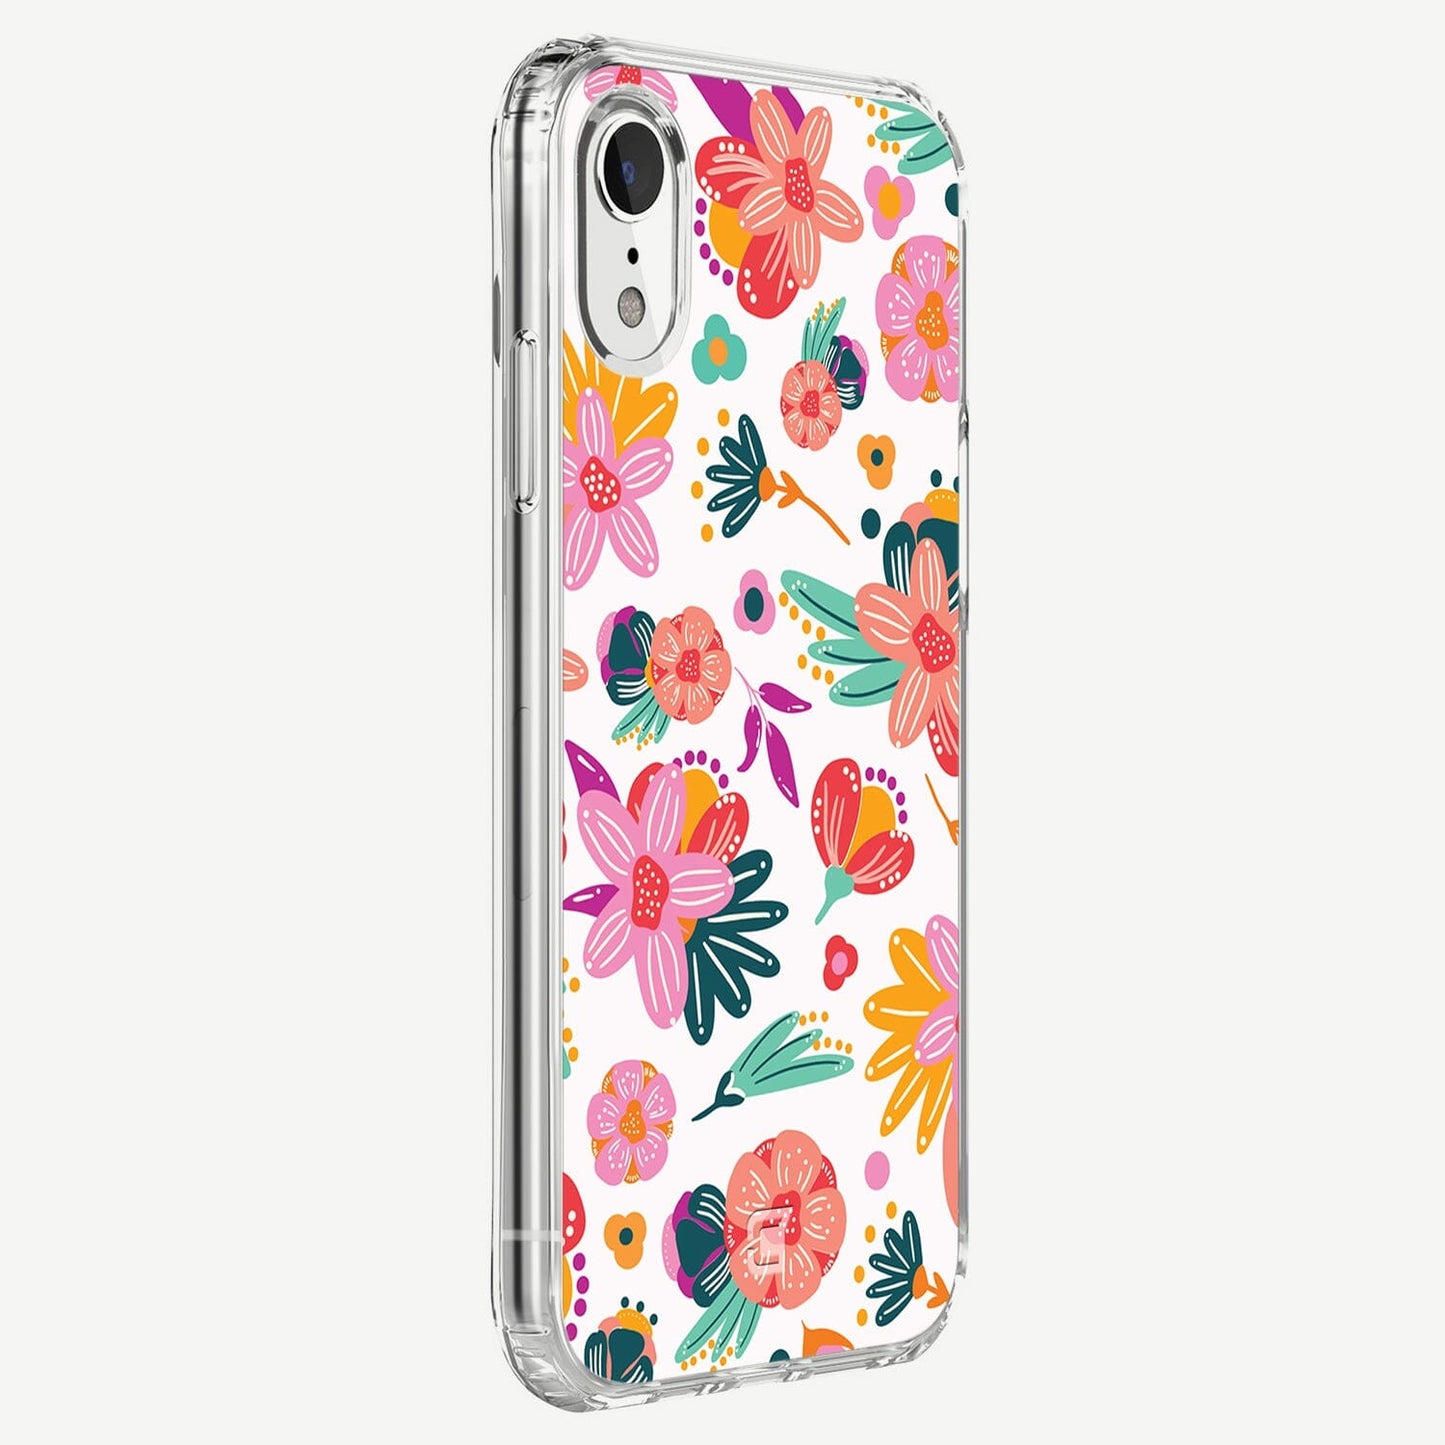 iPhone XR Case - Spring Flowers Design